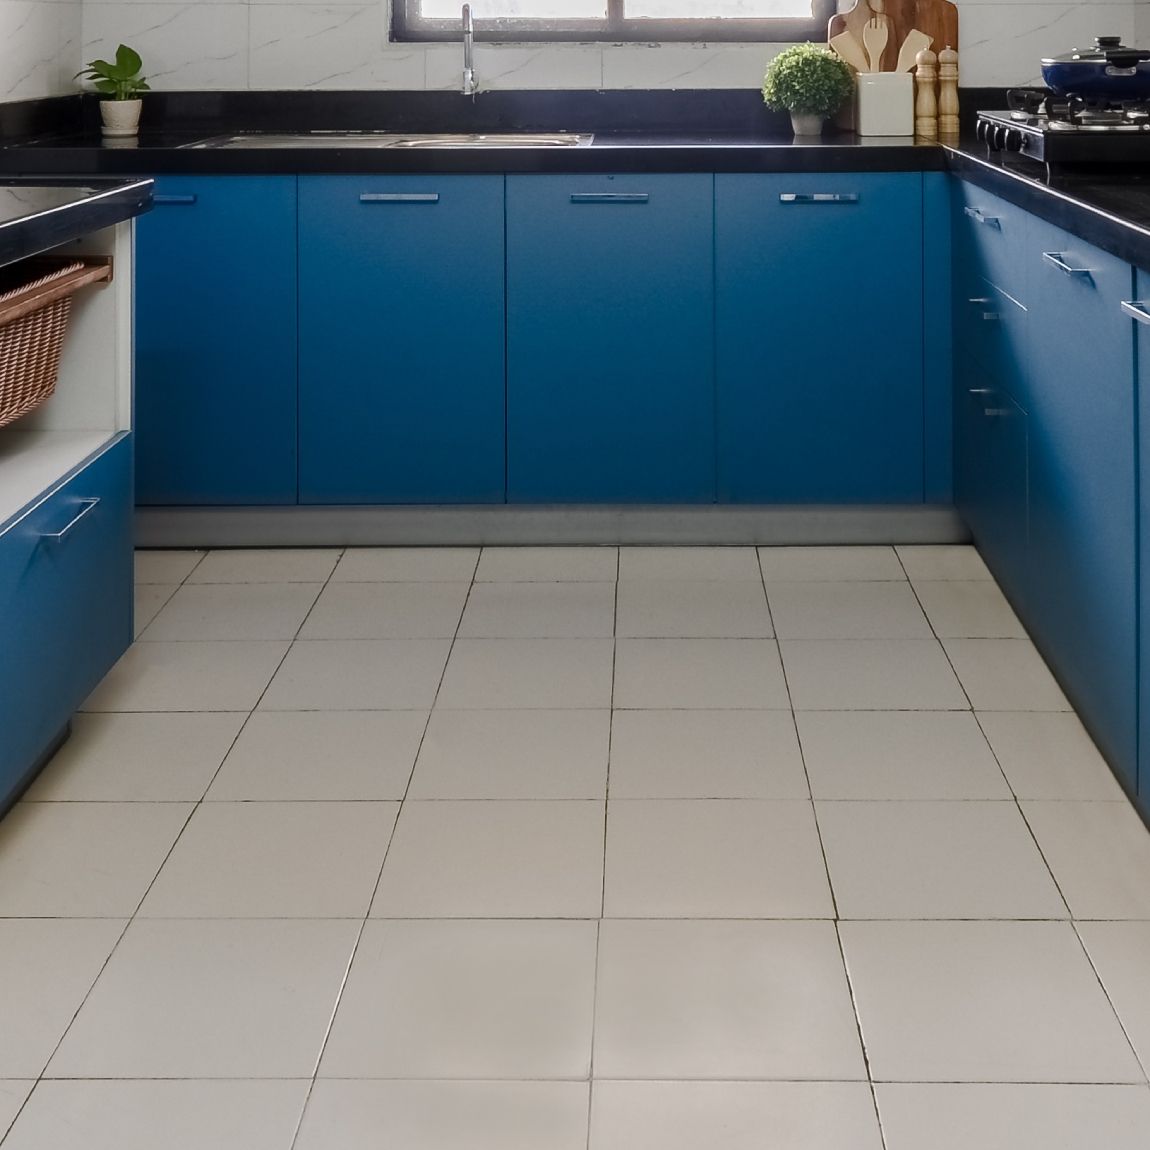 Contemporary Ceramic Floor Tiles Design For Kitchens